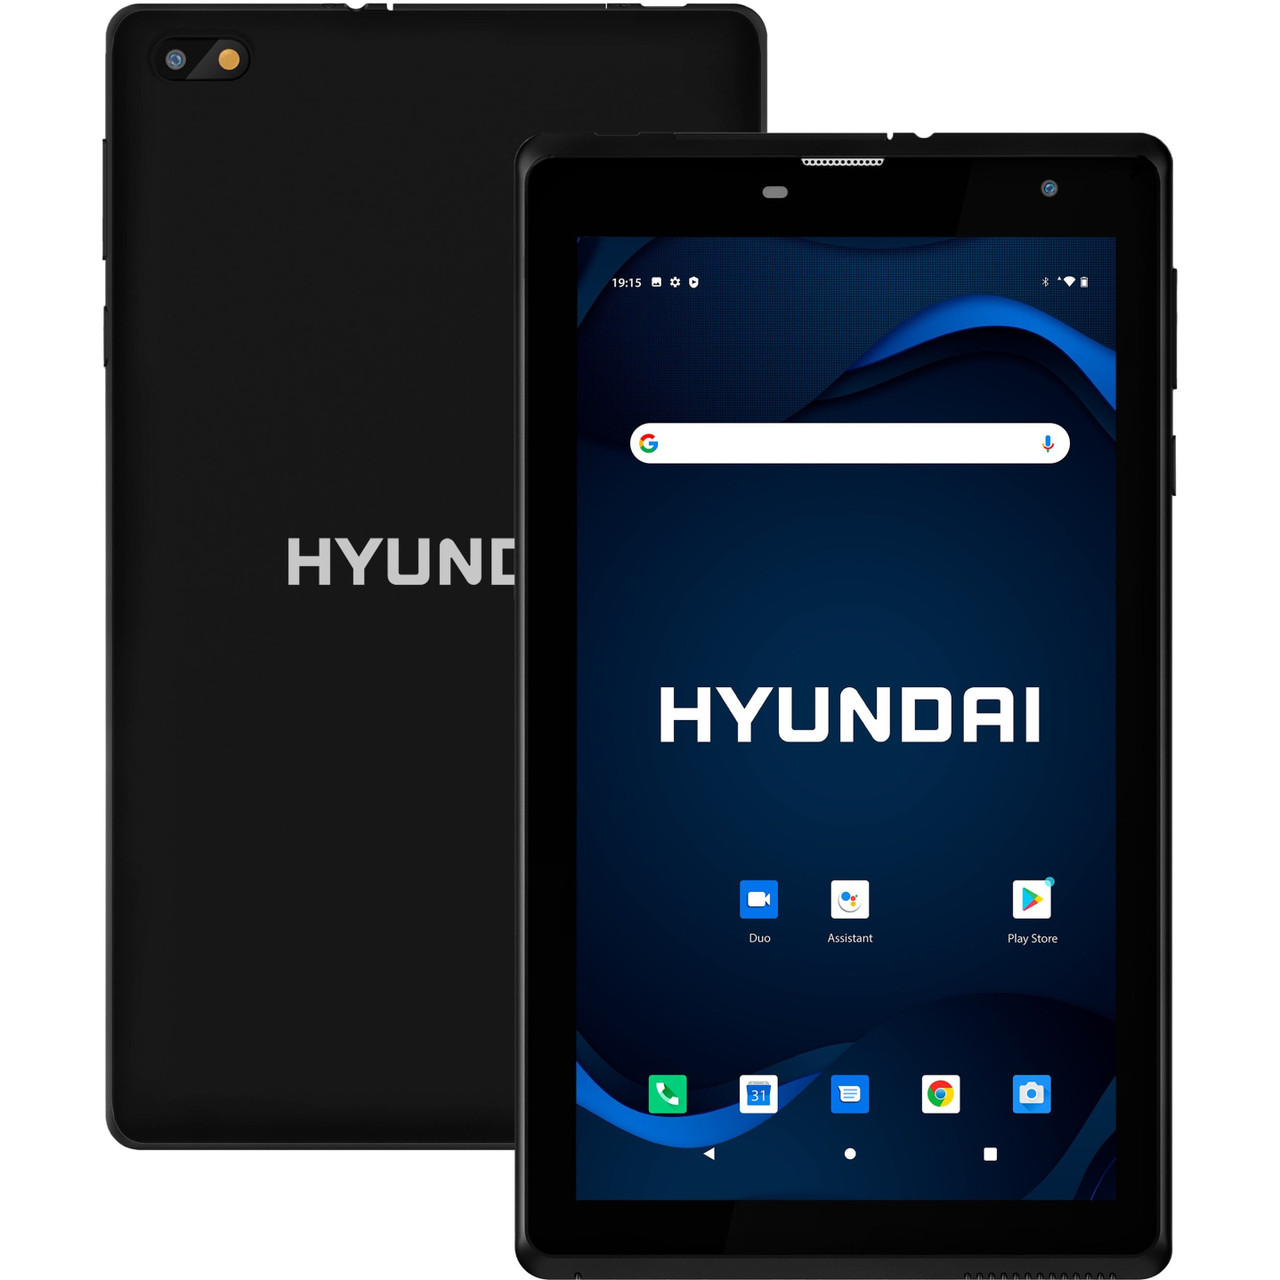 Hyundai HyTab Plus 7LB1, 7" Tablet, 1024x600 IPS, Android 10 Go edition, Quad-Core Processor, 2GB RAM, 32GB Storage, 2MP/5MP, LTE - Black - HT7LB1PBKNA